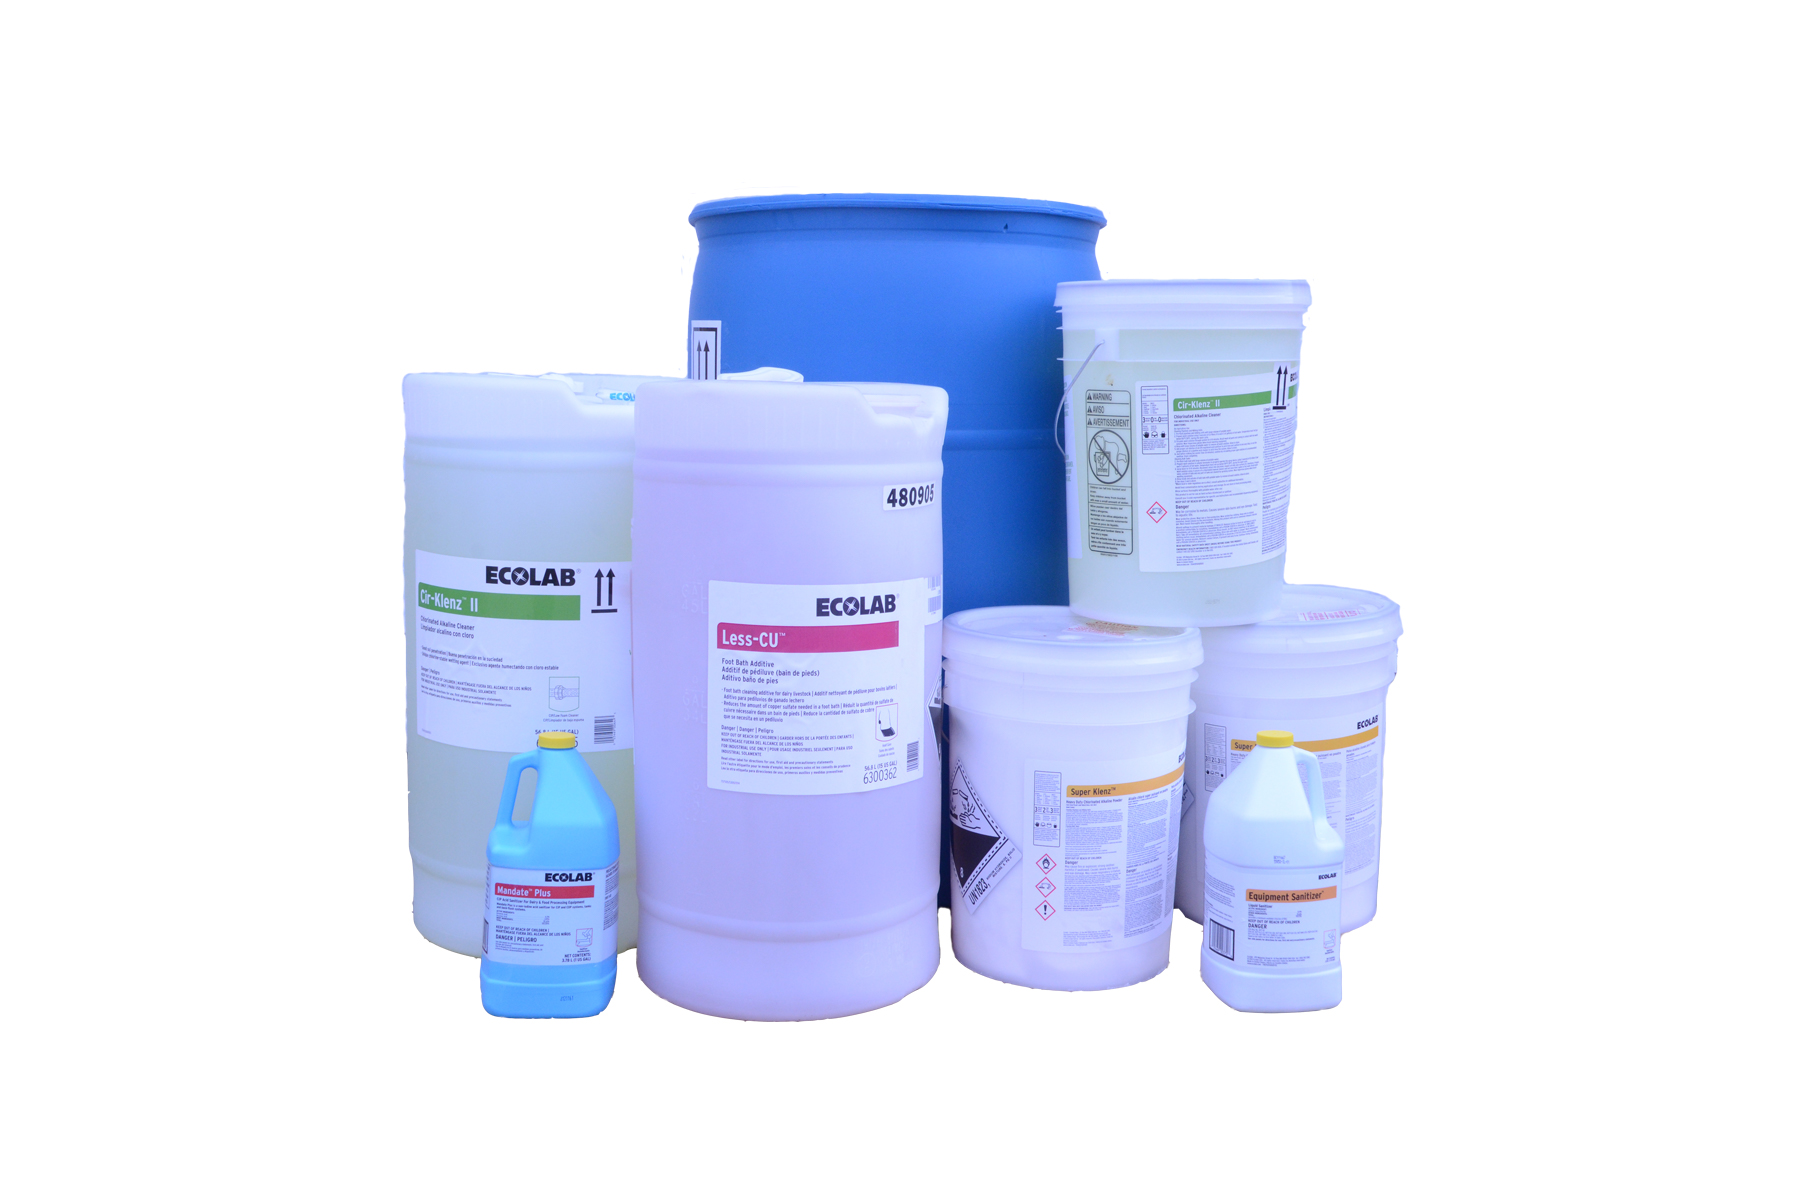 Total Spray and Wash (Liquid) - buy at Galaxus